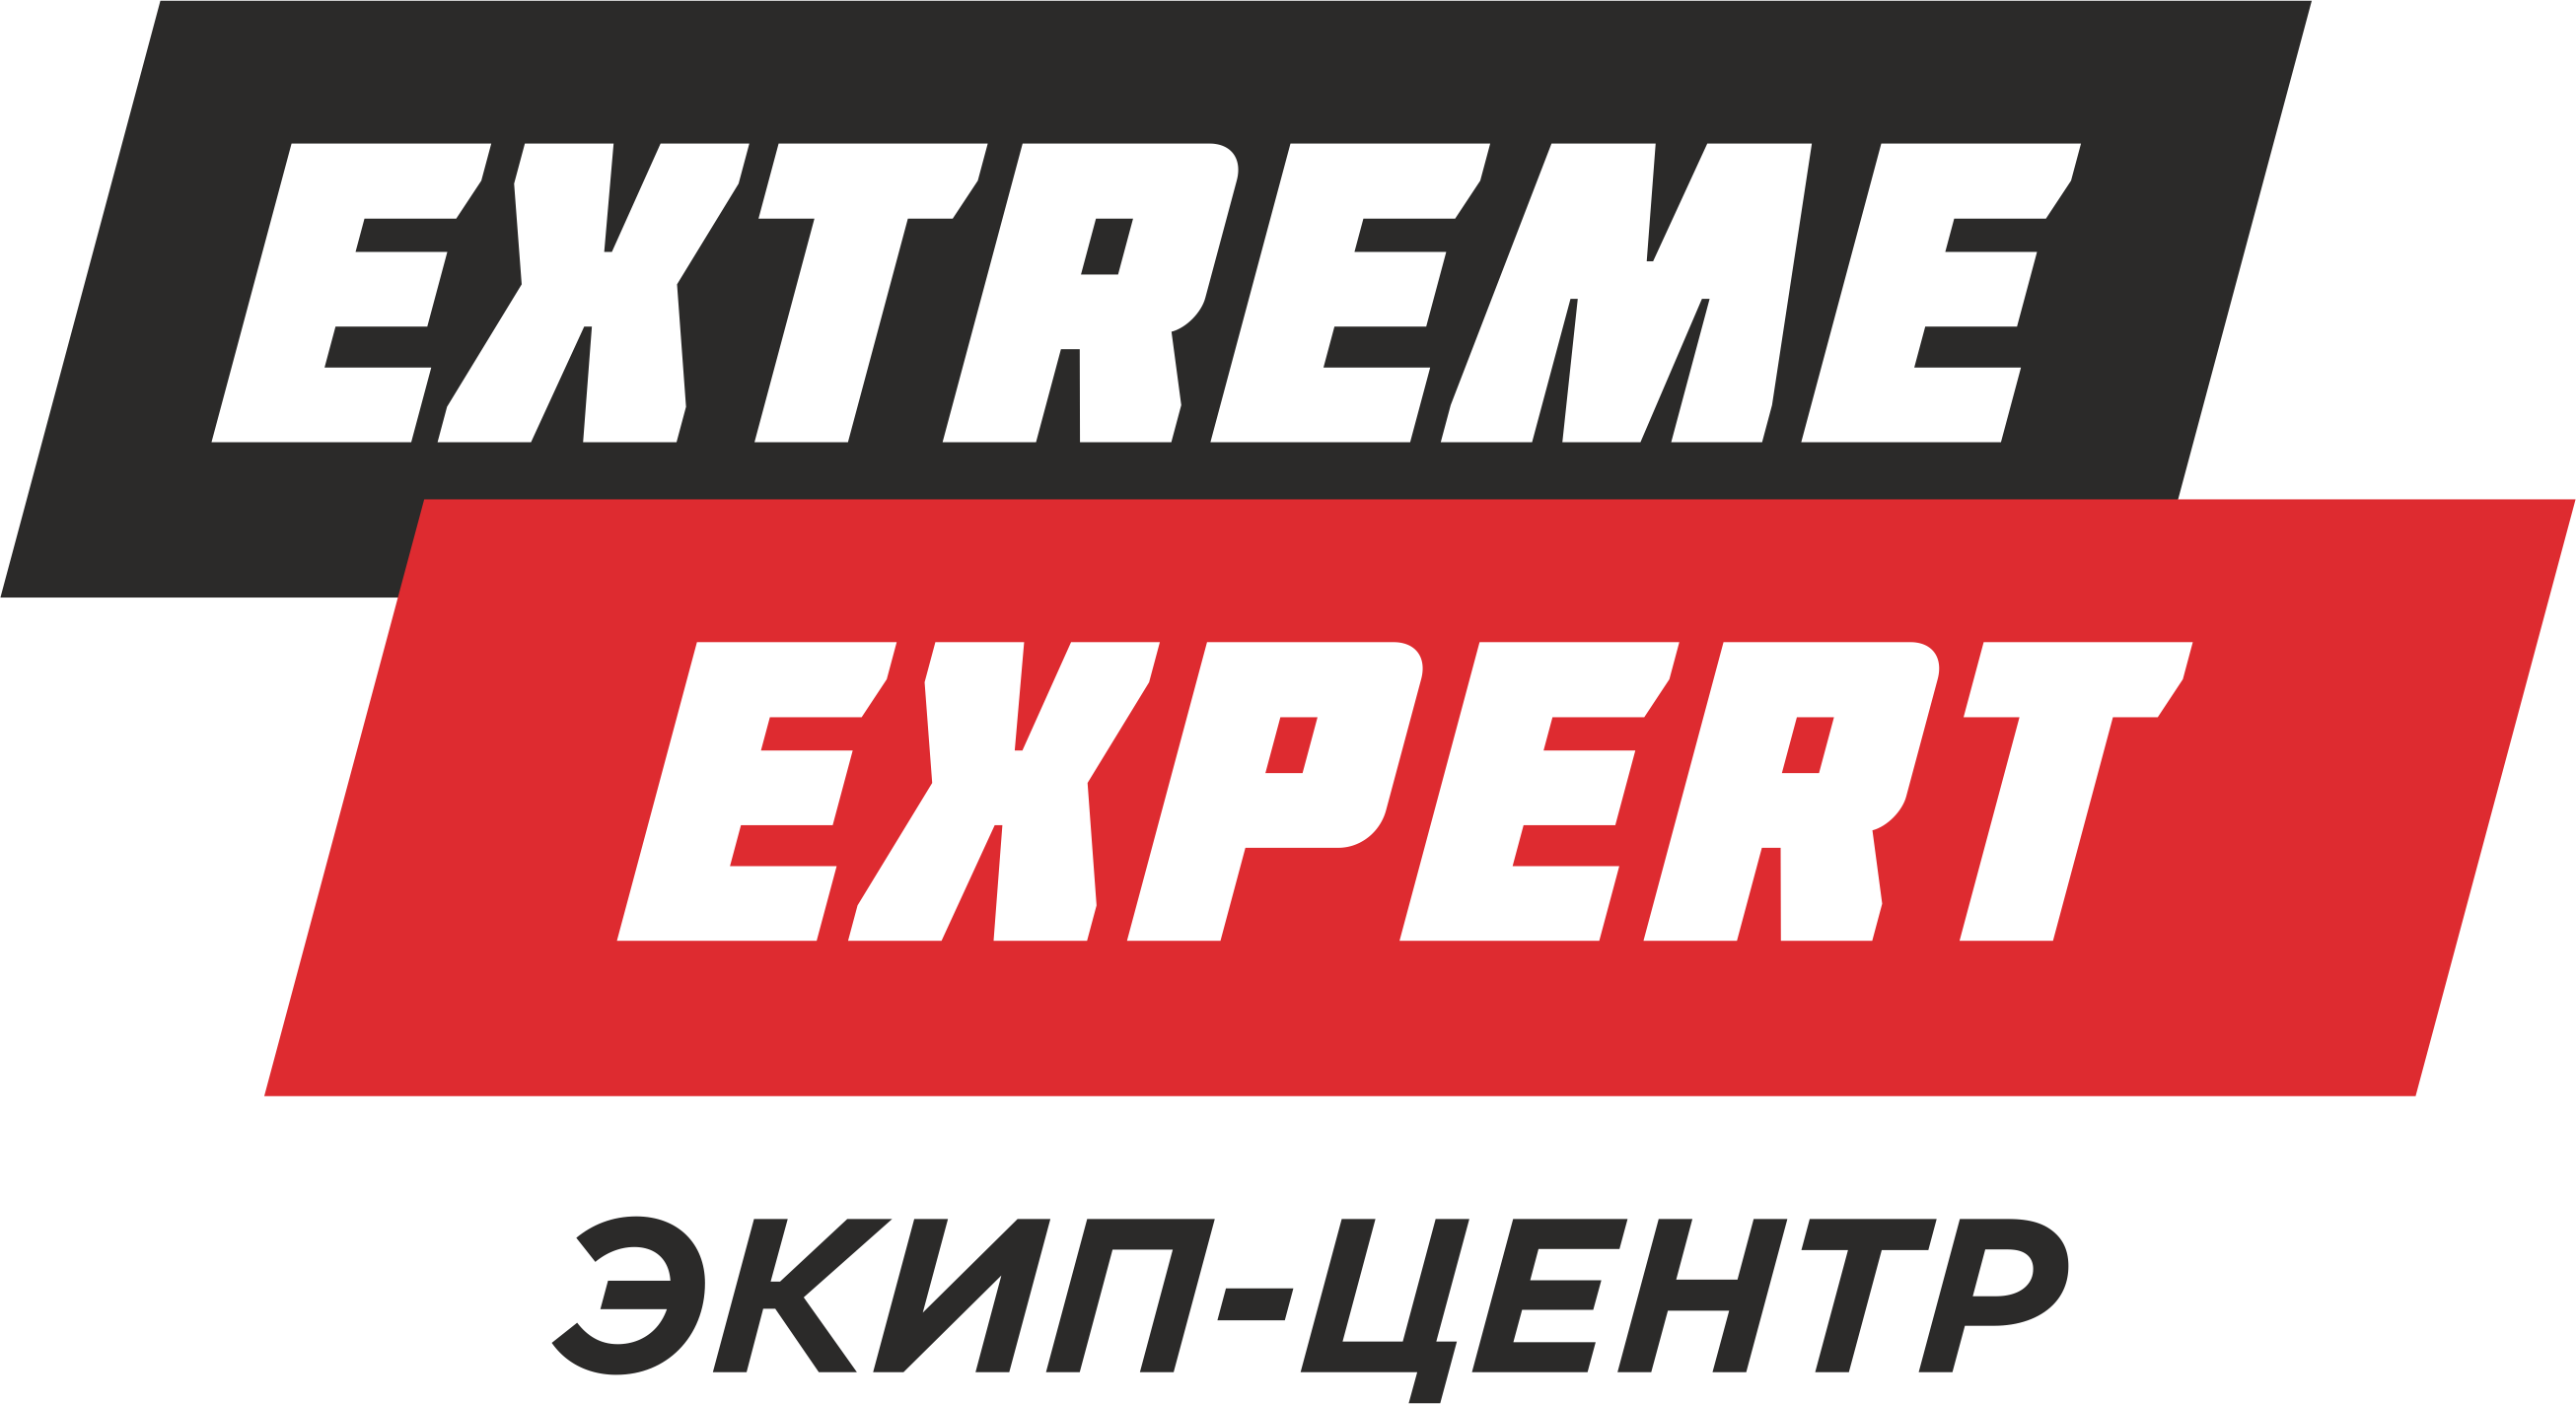 Extreme Expert